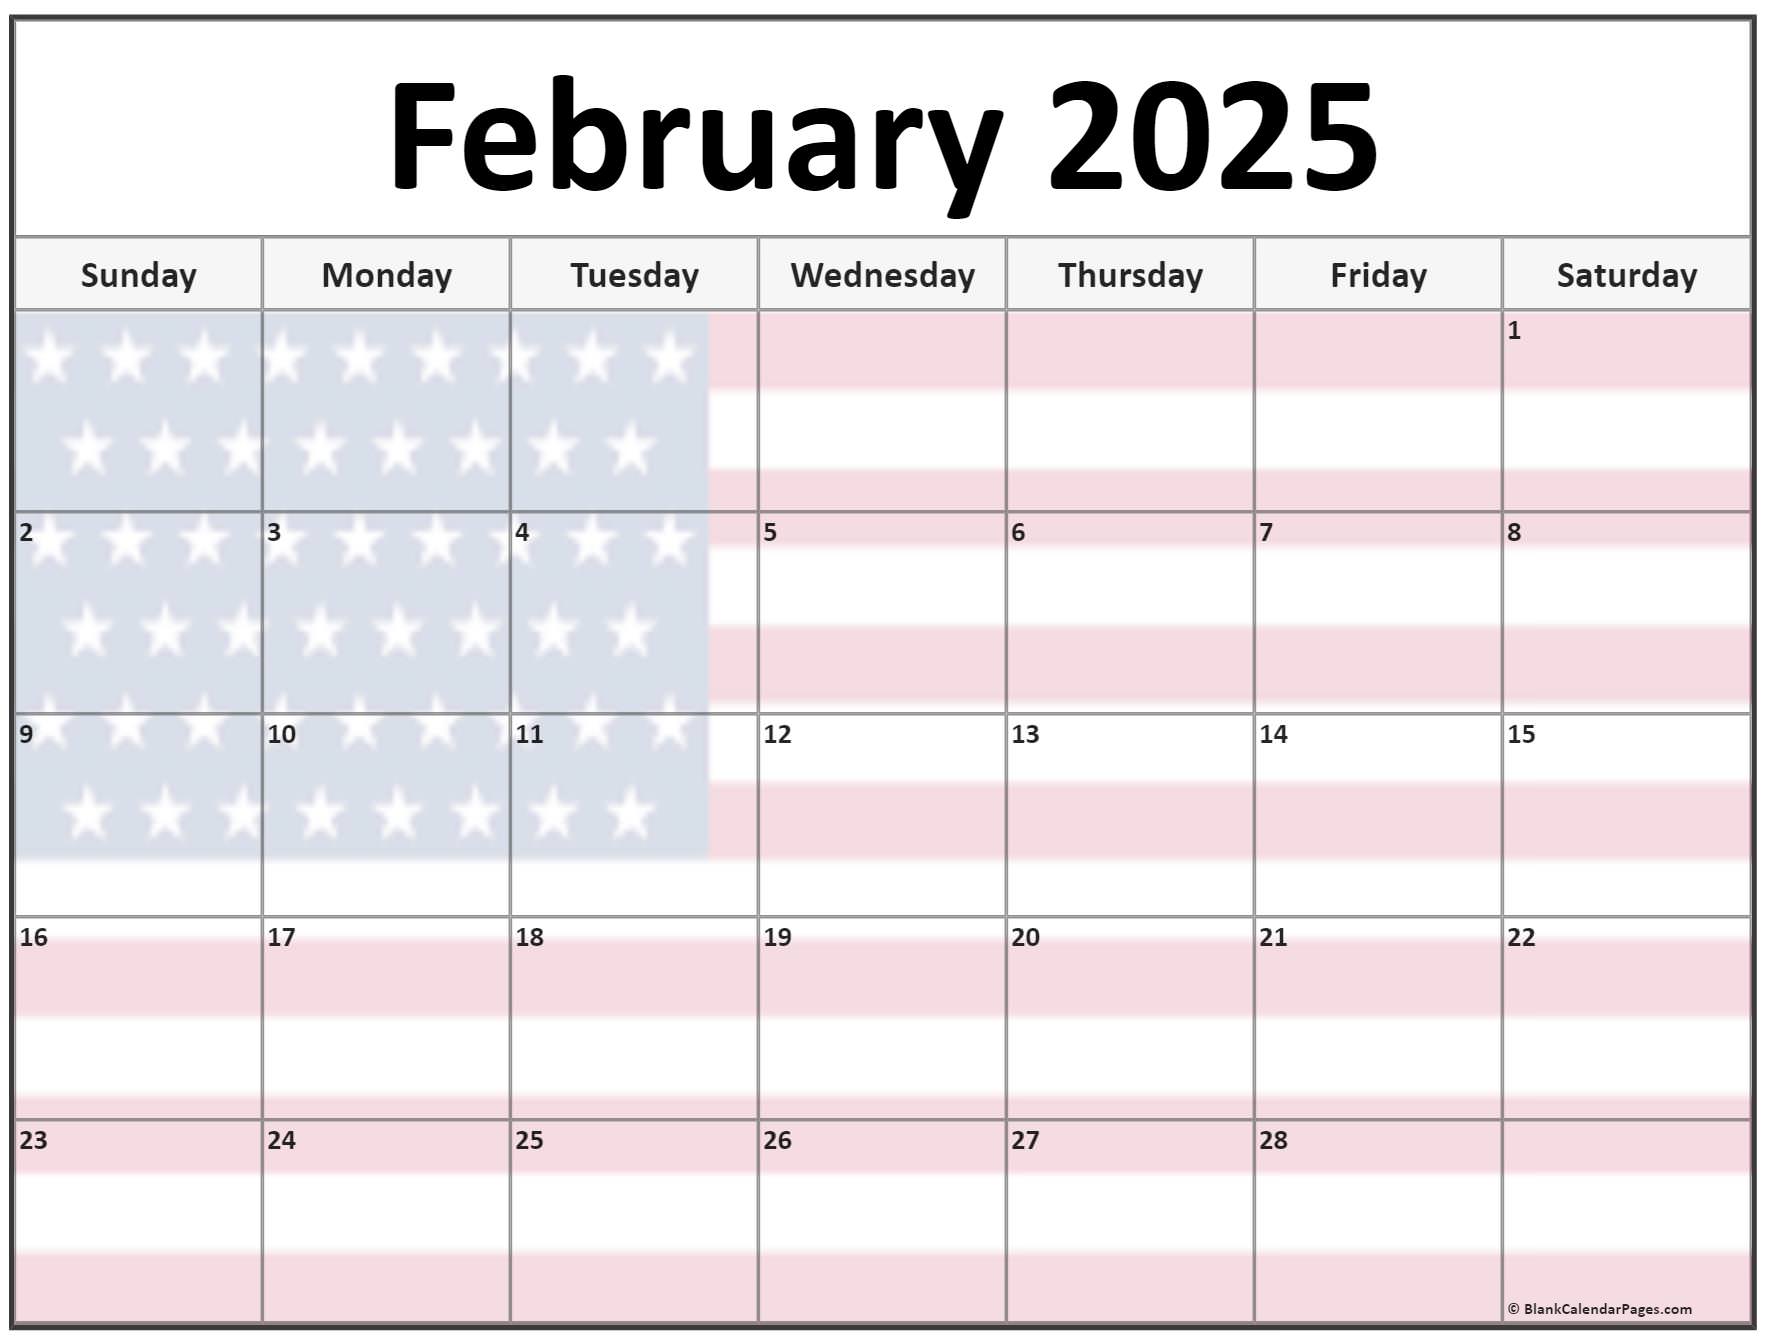 February 2025 Calendar Leap Year